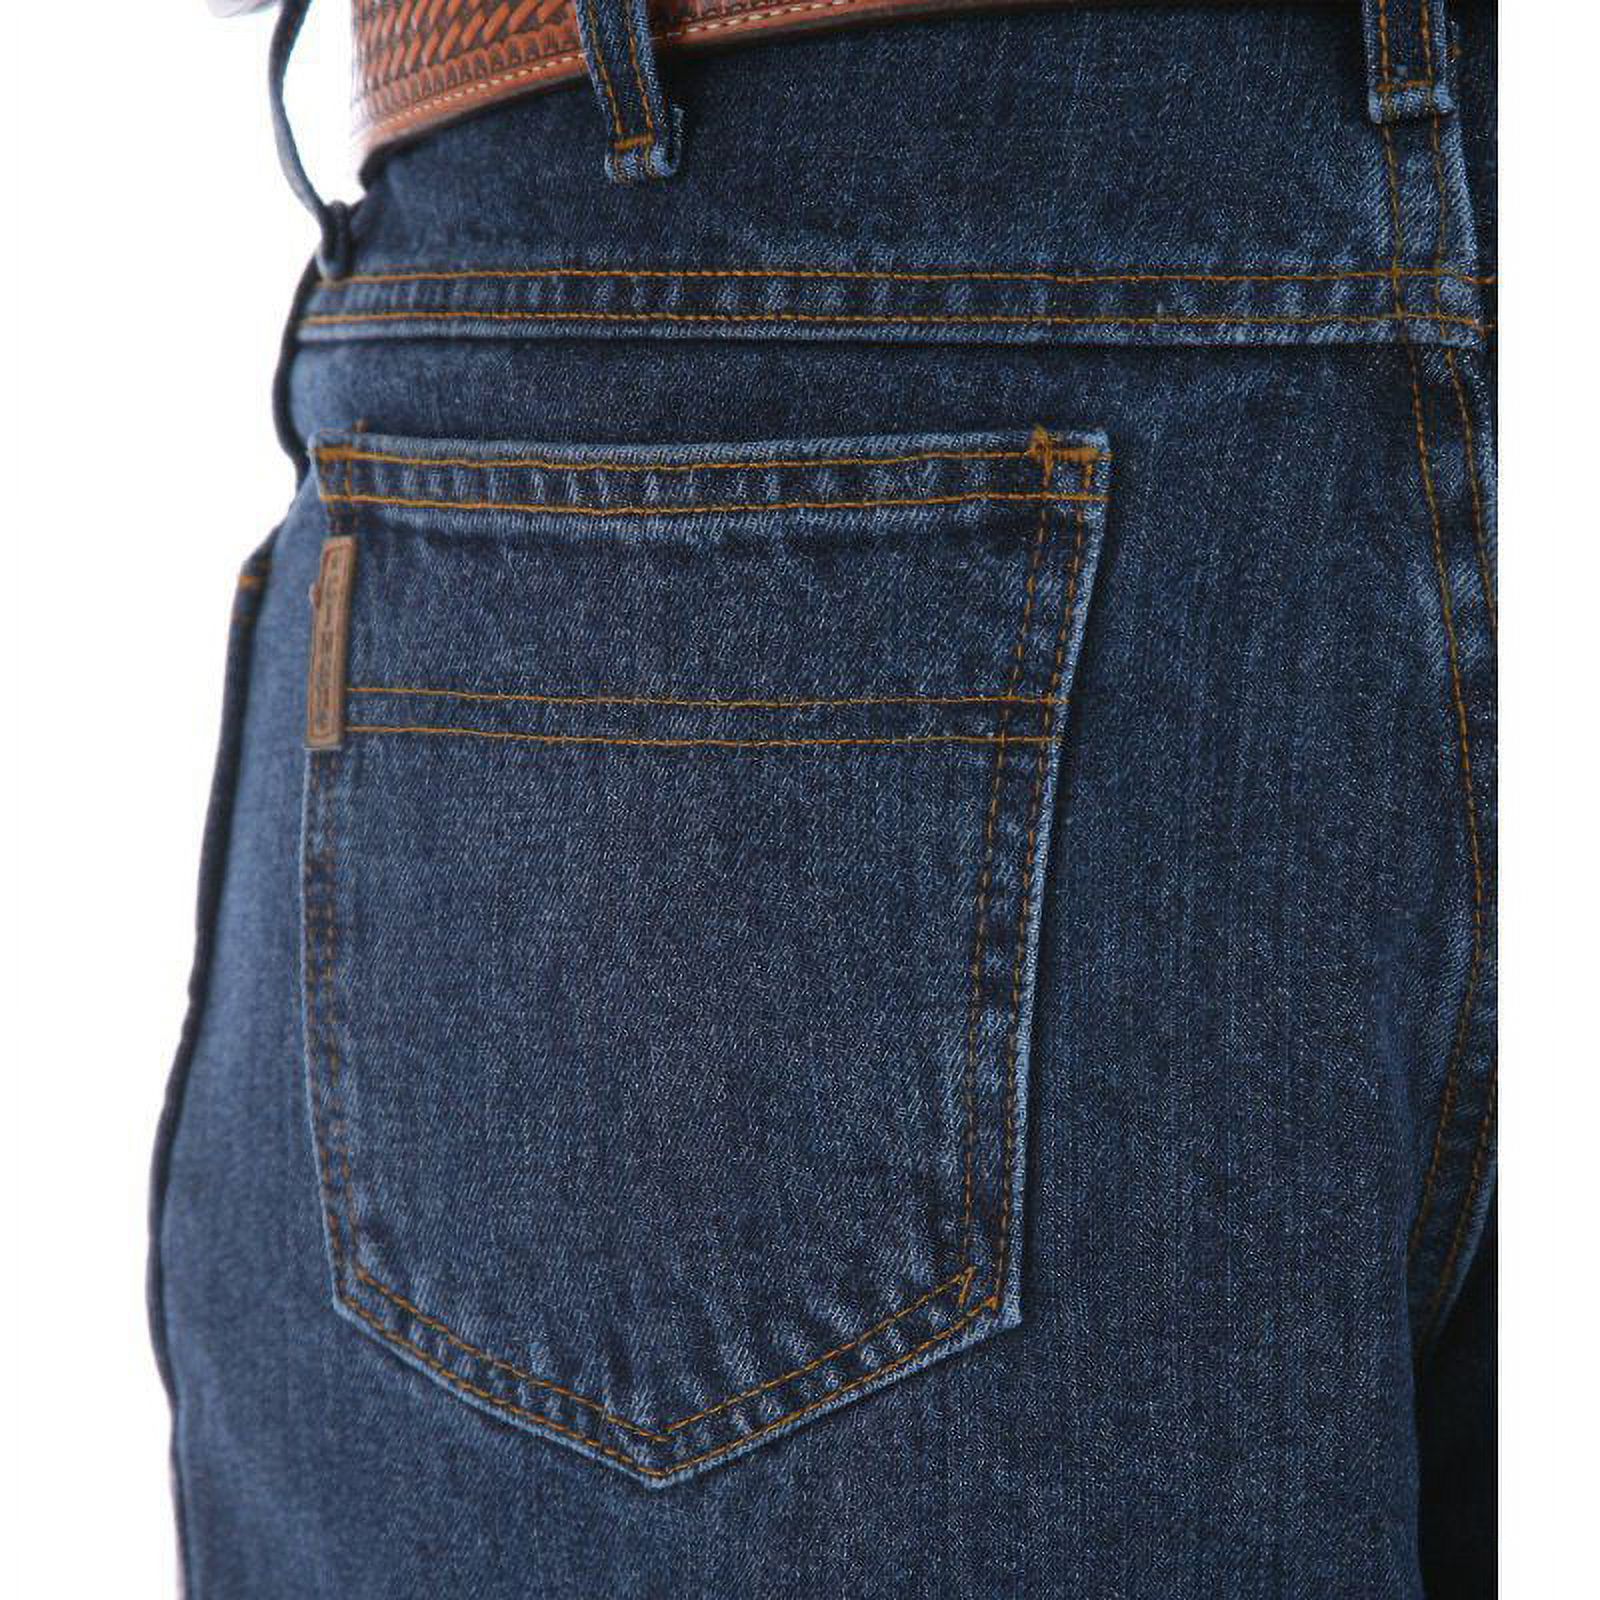 Cinch Apparel Mens Green Label Original Fit Jeans 44x36 Dark Stonewash - image 3 of 4